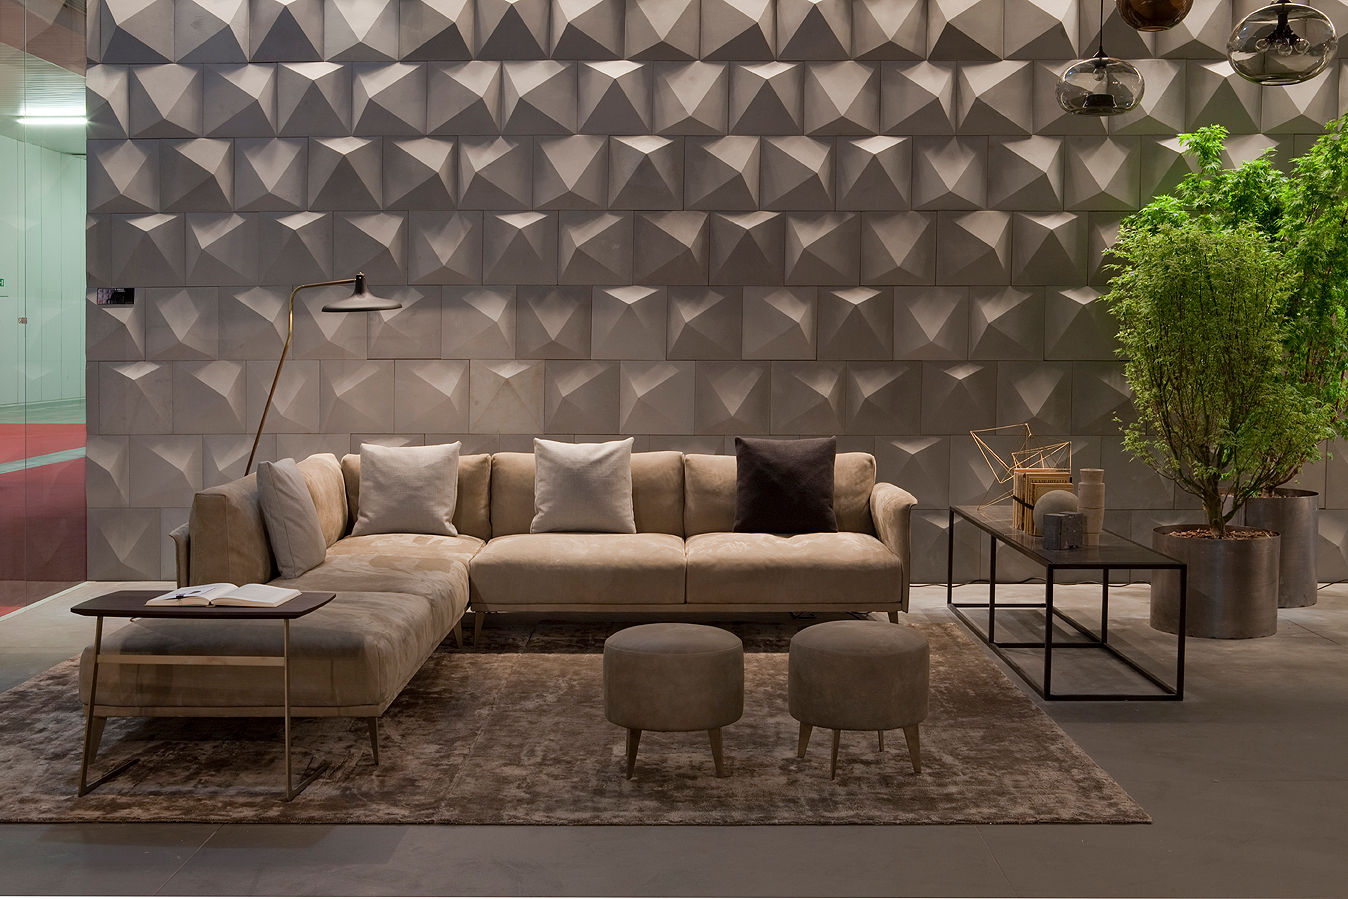 Industrial design - Doimo sofas - Stile libero, IMAGO DESIGN IMAGO DESIGN Paredes e pisos modernos Revestimentos de parede e pavimentos